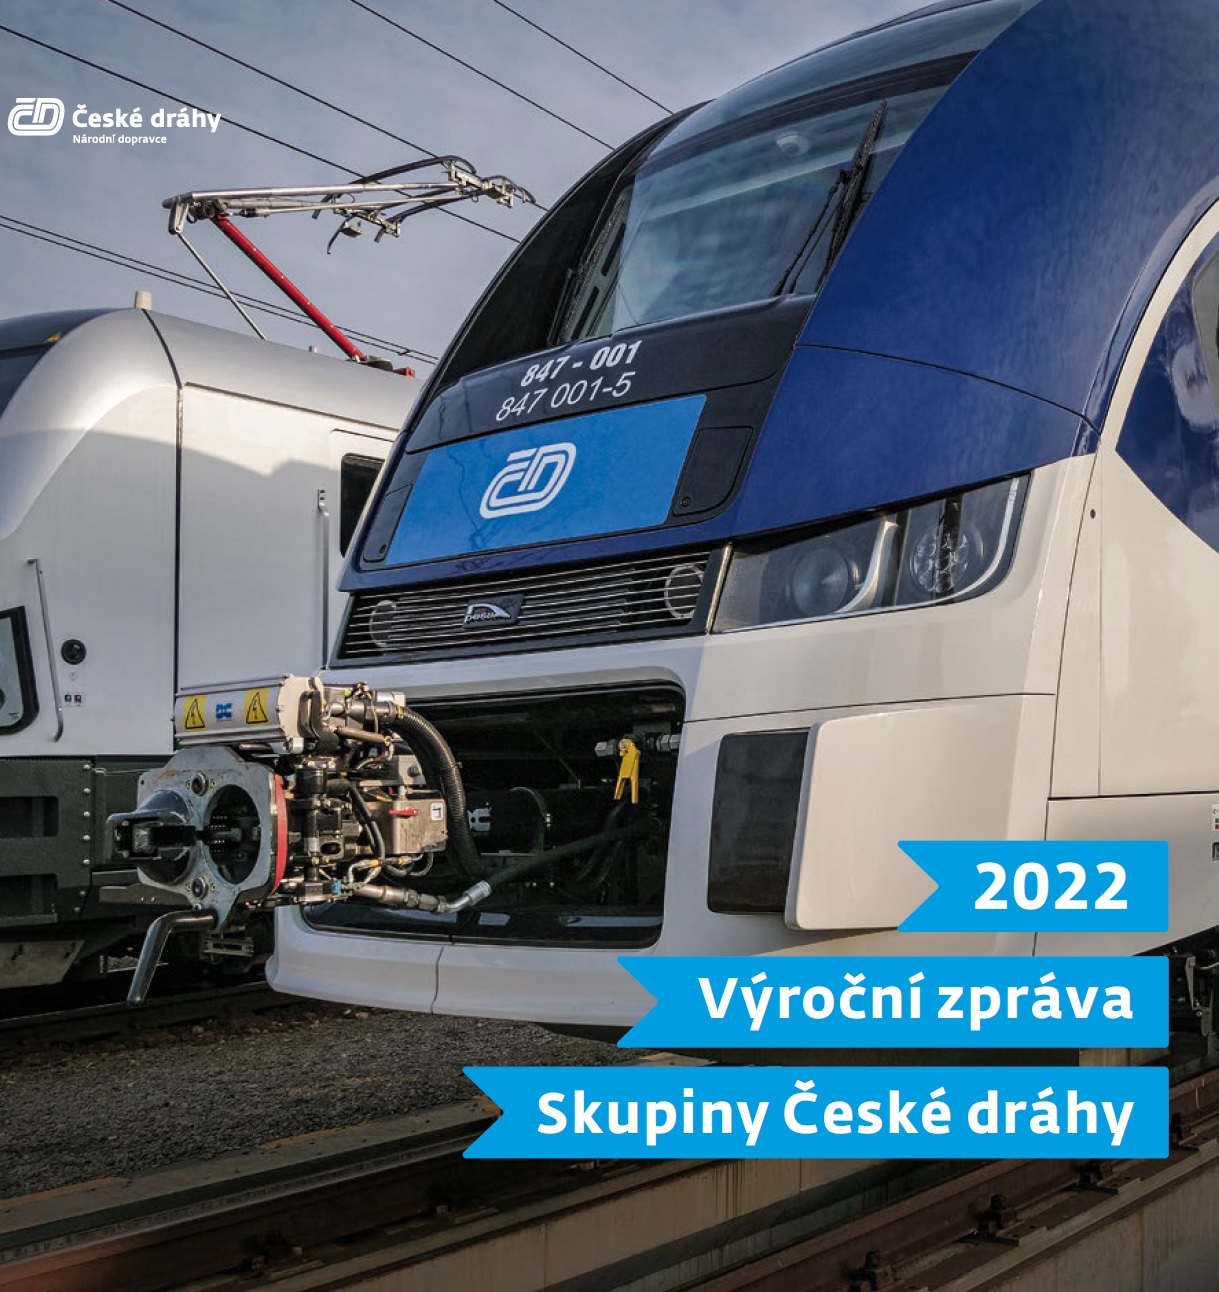 Annual Report of the České dráhy Group 2022